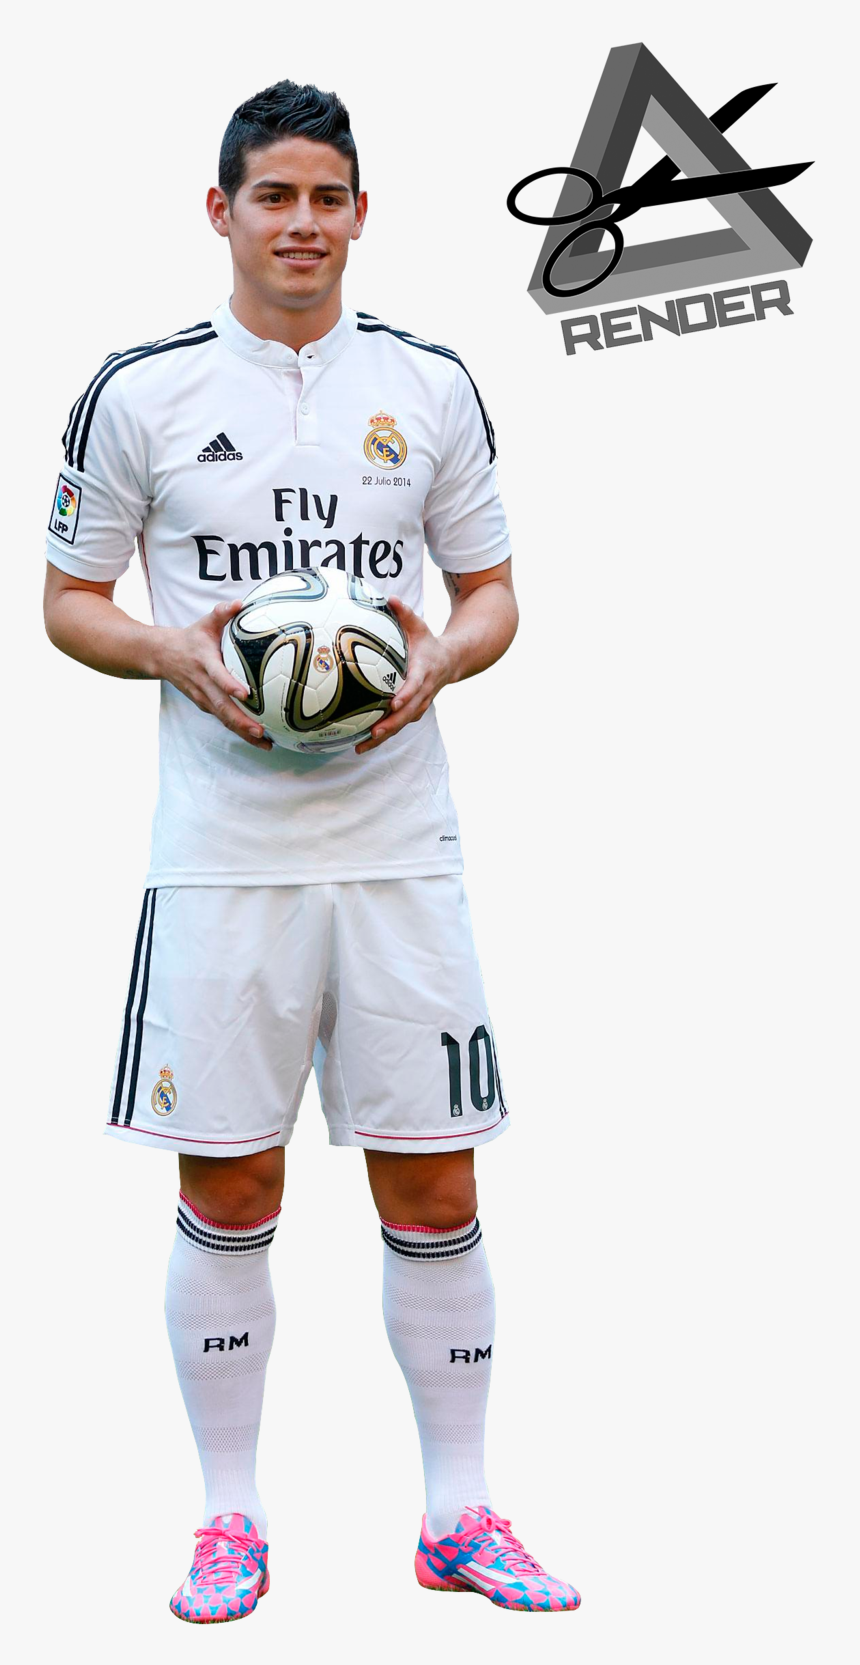 Transparent Ronaldo Png - James Rodriguez Real Madrid 2014 2015, Png Download, Free Download